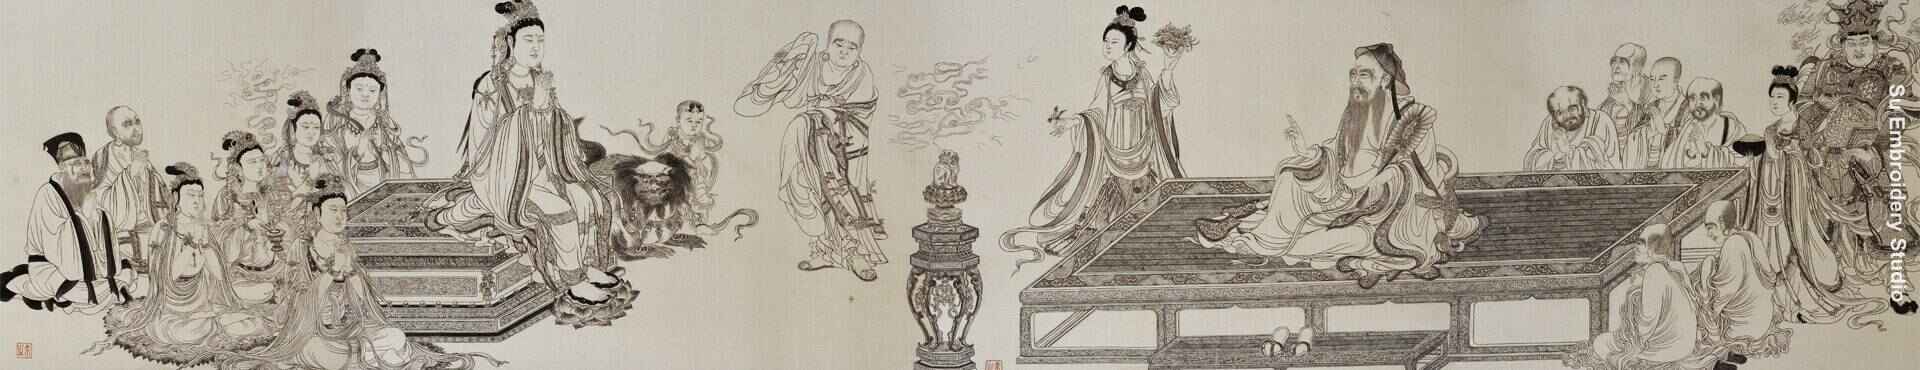 chinese silk embroidery painting Vimalakirti Preching Doctrines